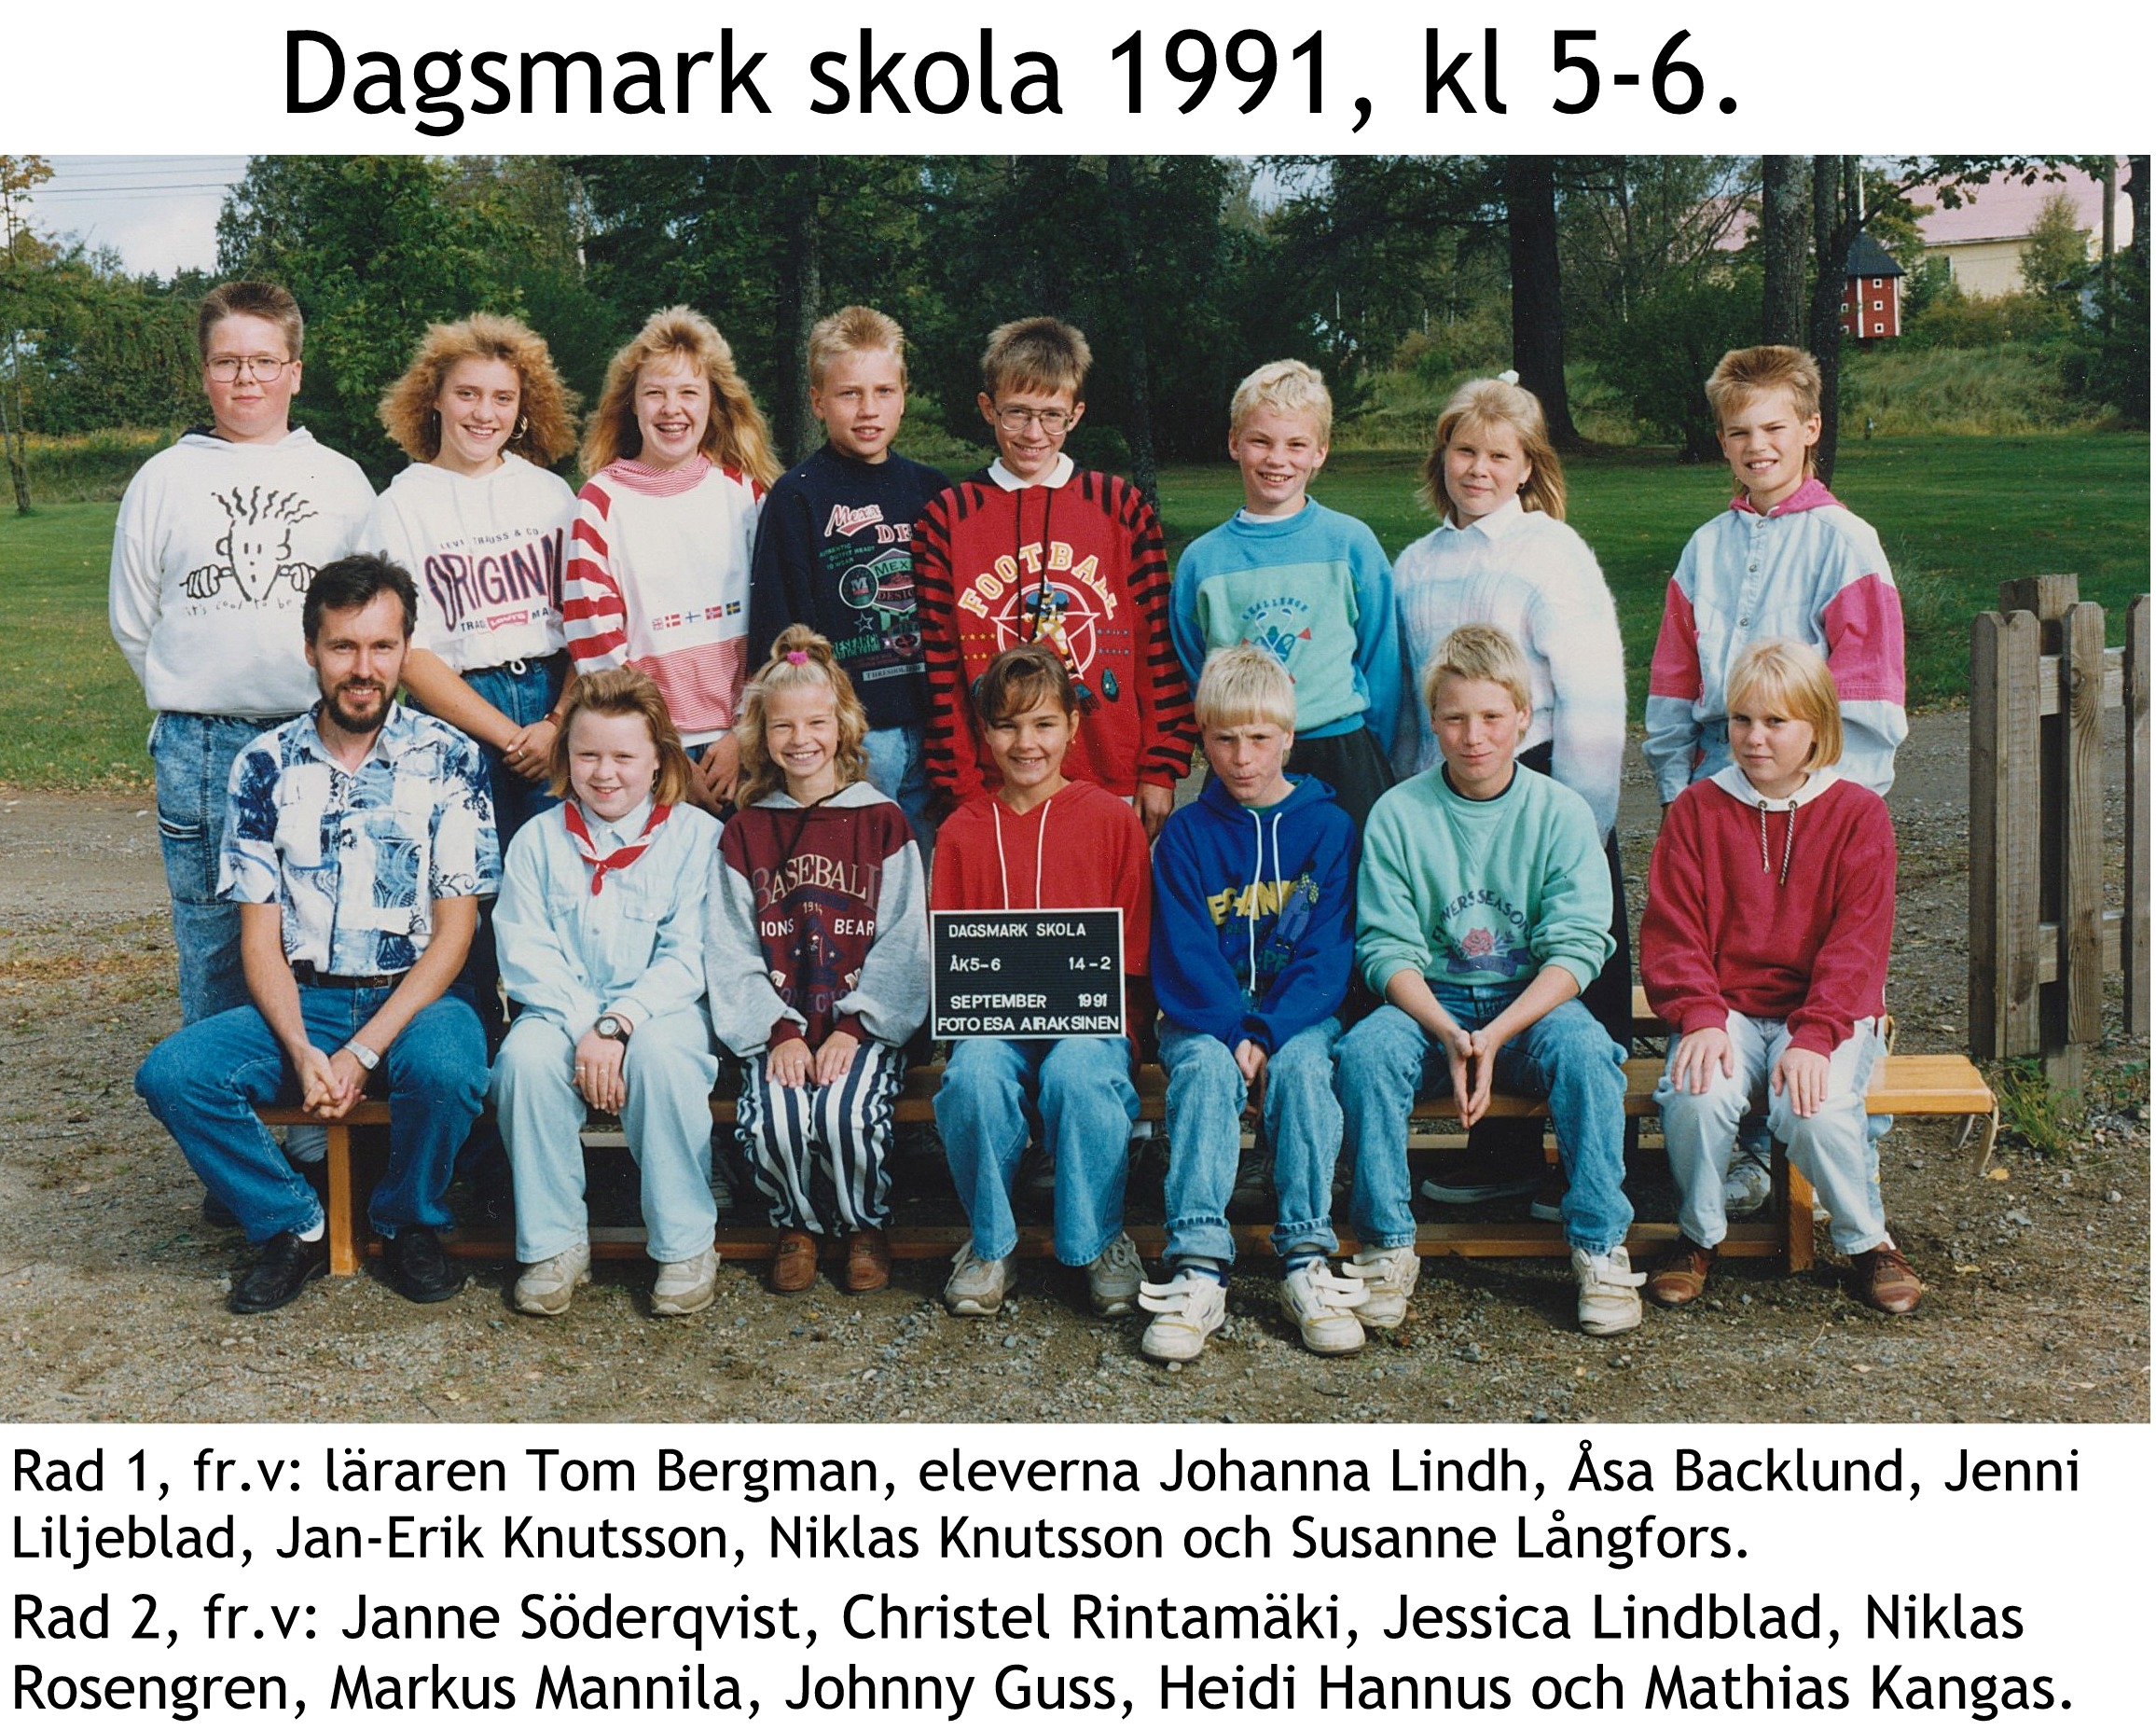 1991 Dagsmark skola kl 5-6